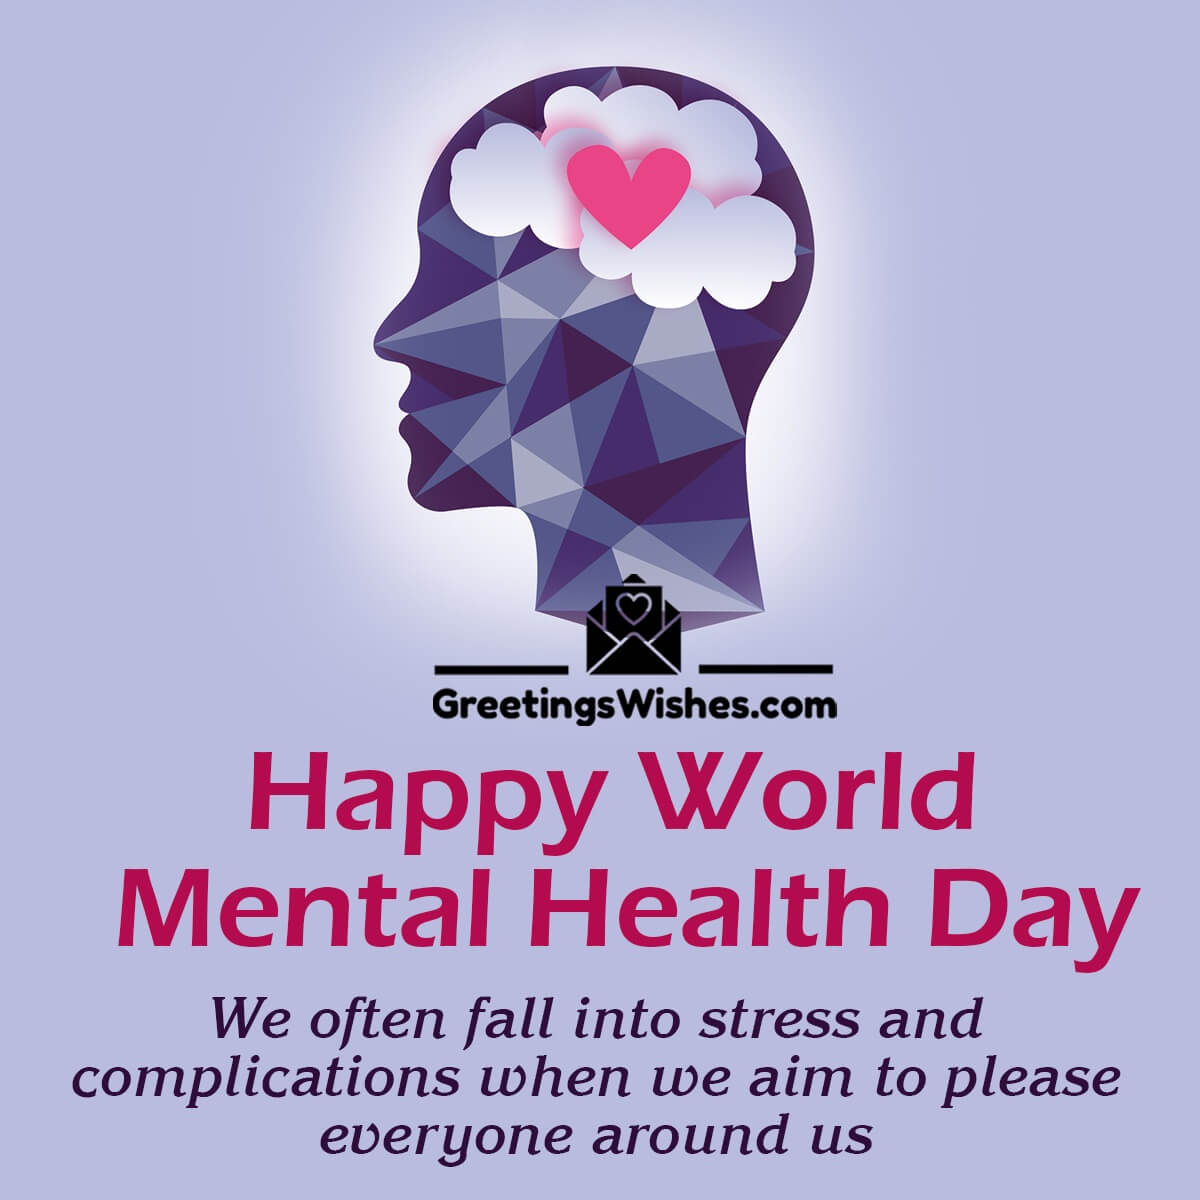 Happy World Mental Health Day Image